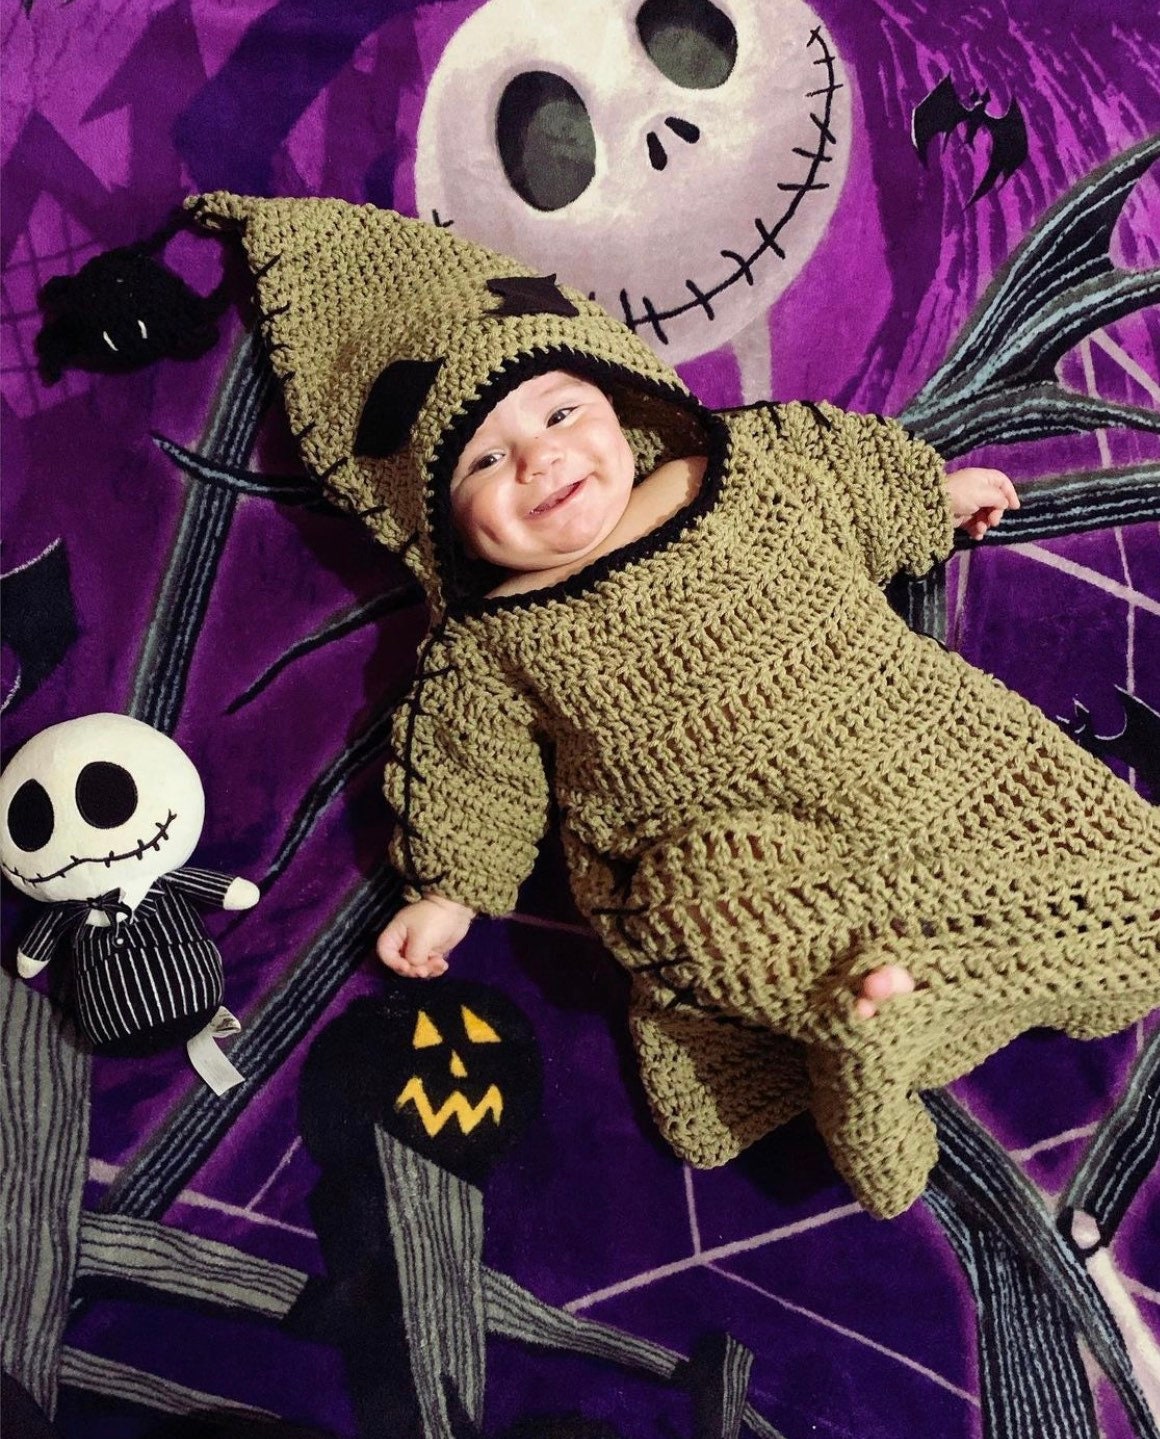 Disney Tim Burton's The Nightmare Before Christmas Crochet (Crochet Kits)  (Mixed media product)